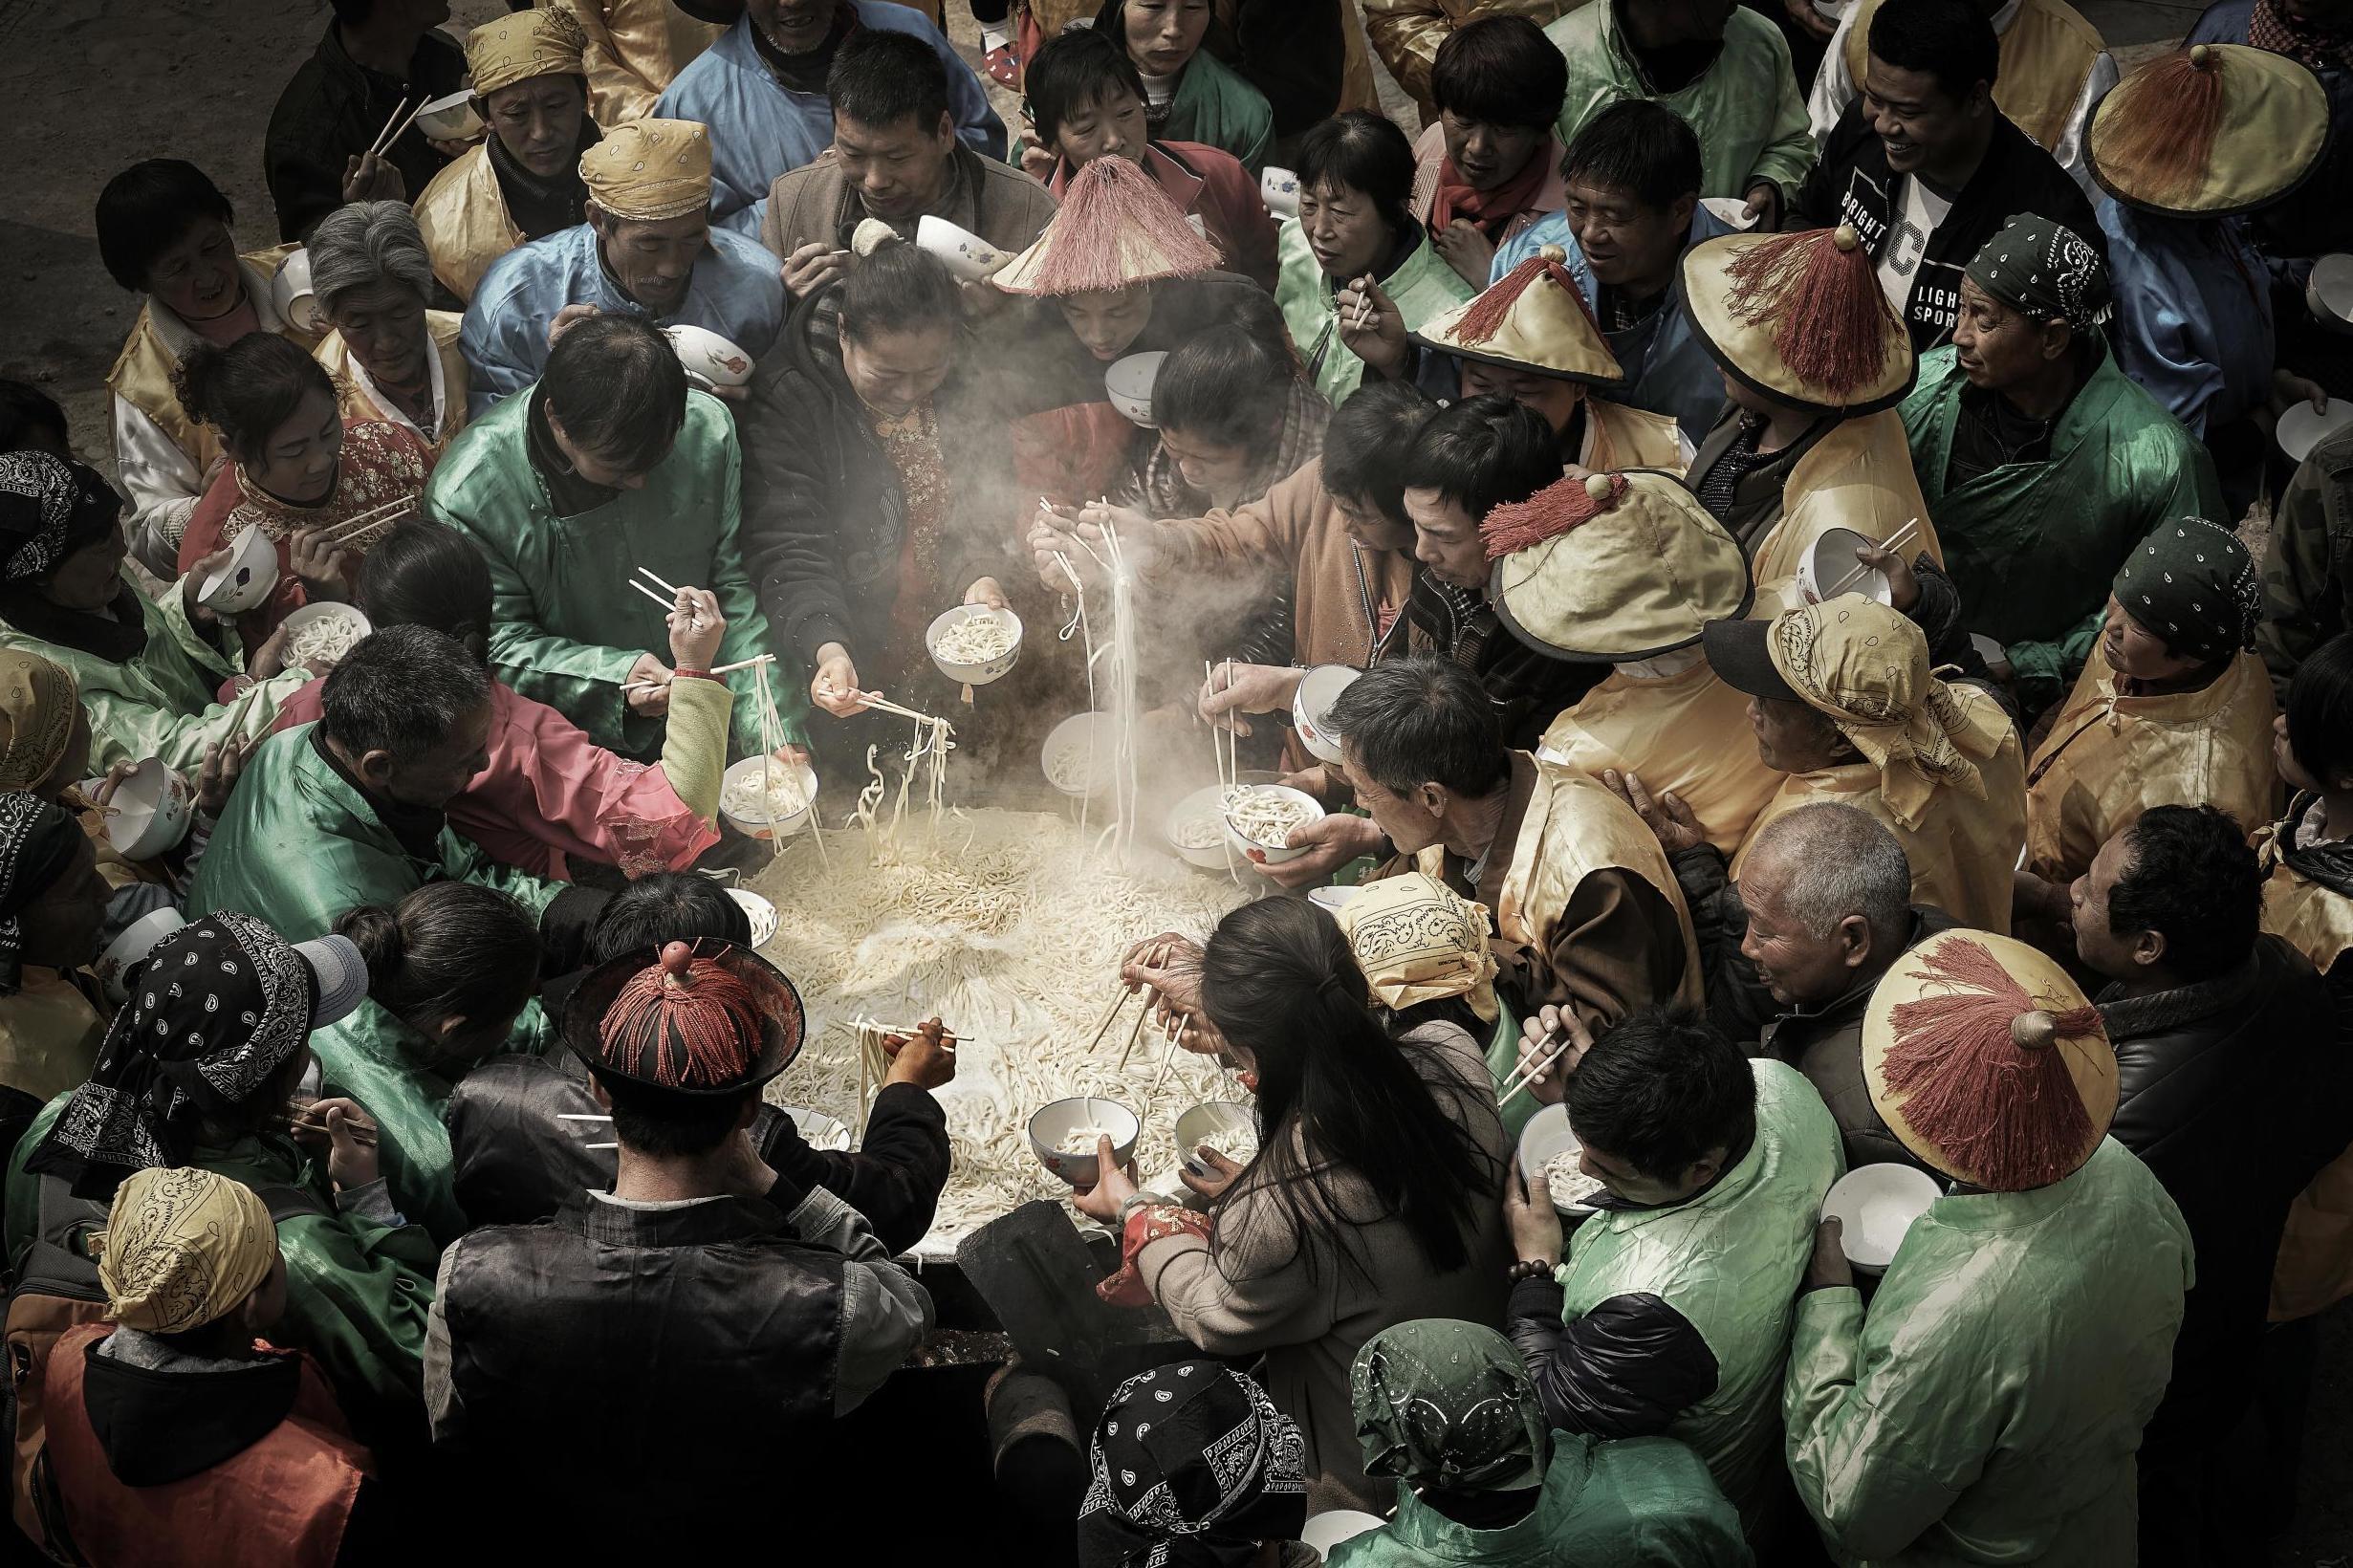 Chinese photographer Jianhui Liao wins Food Photographer of the Year 2019 award (Jianhui Liao)